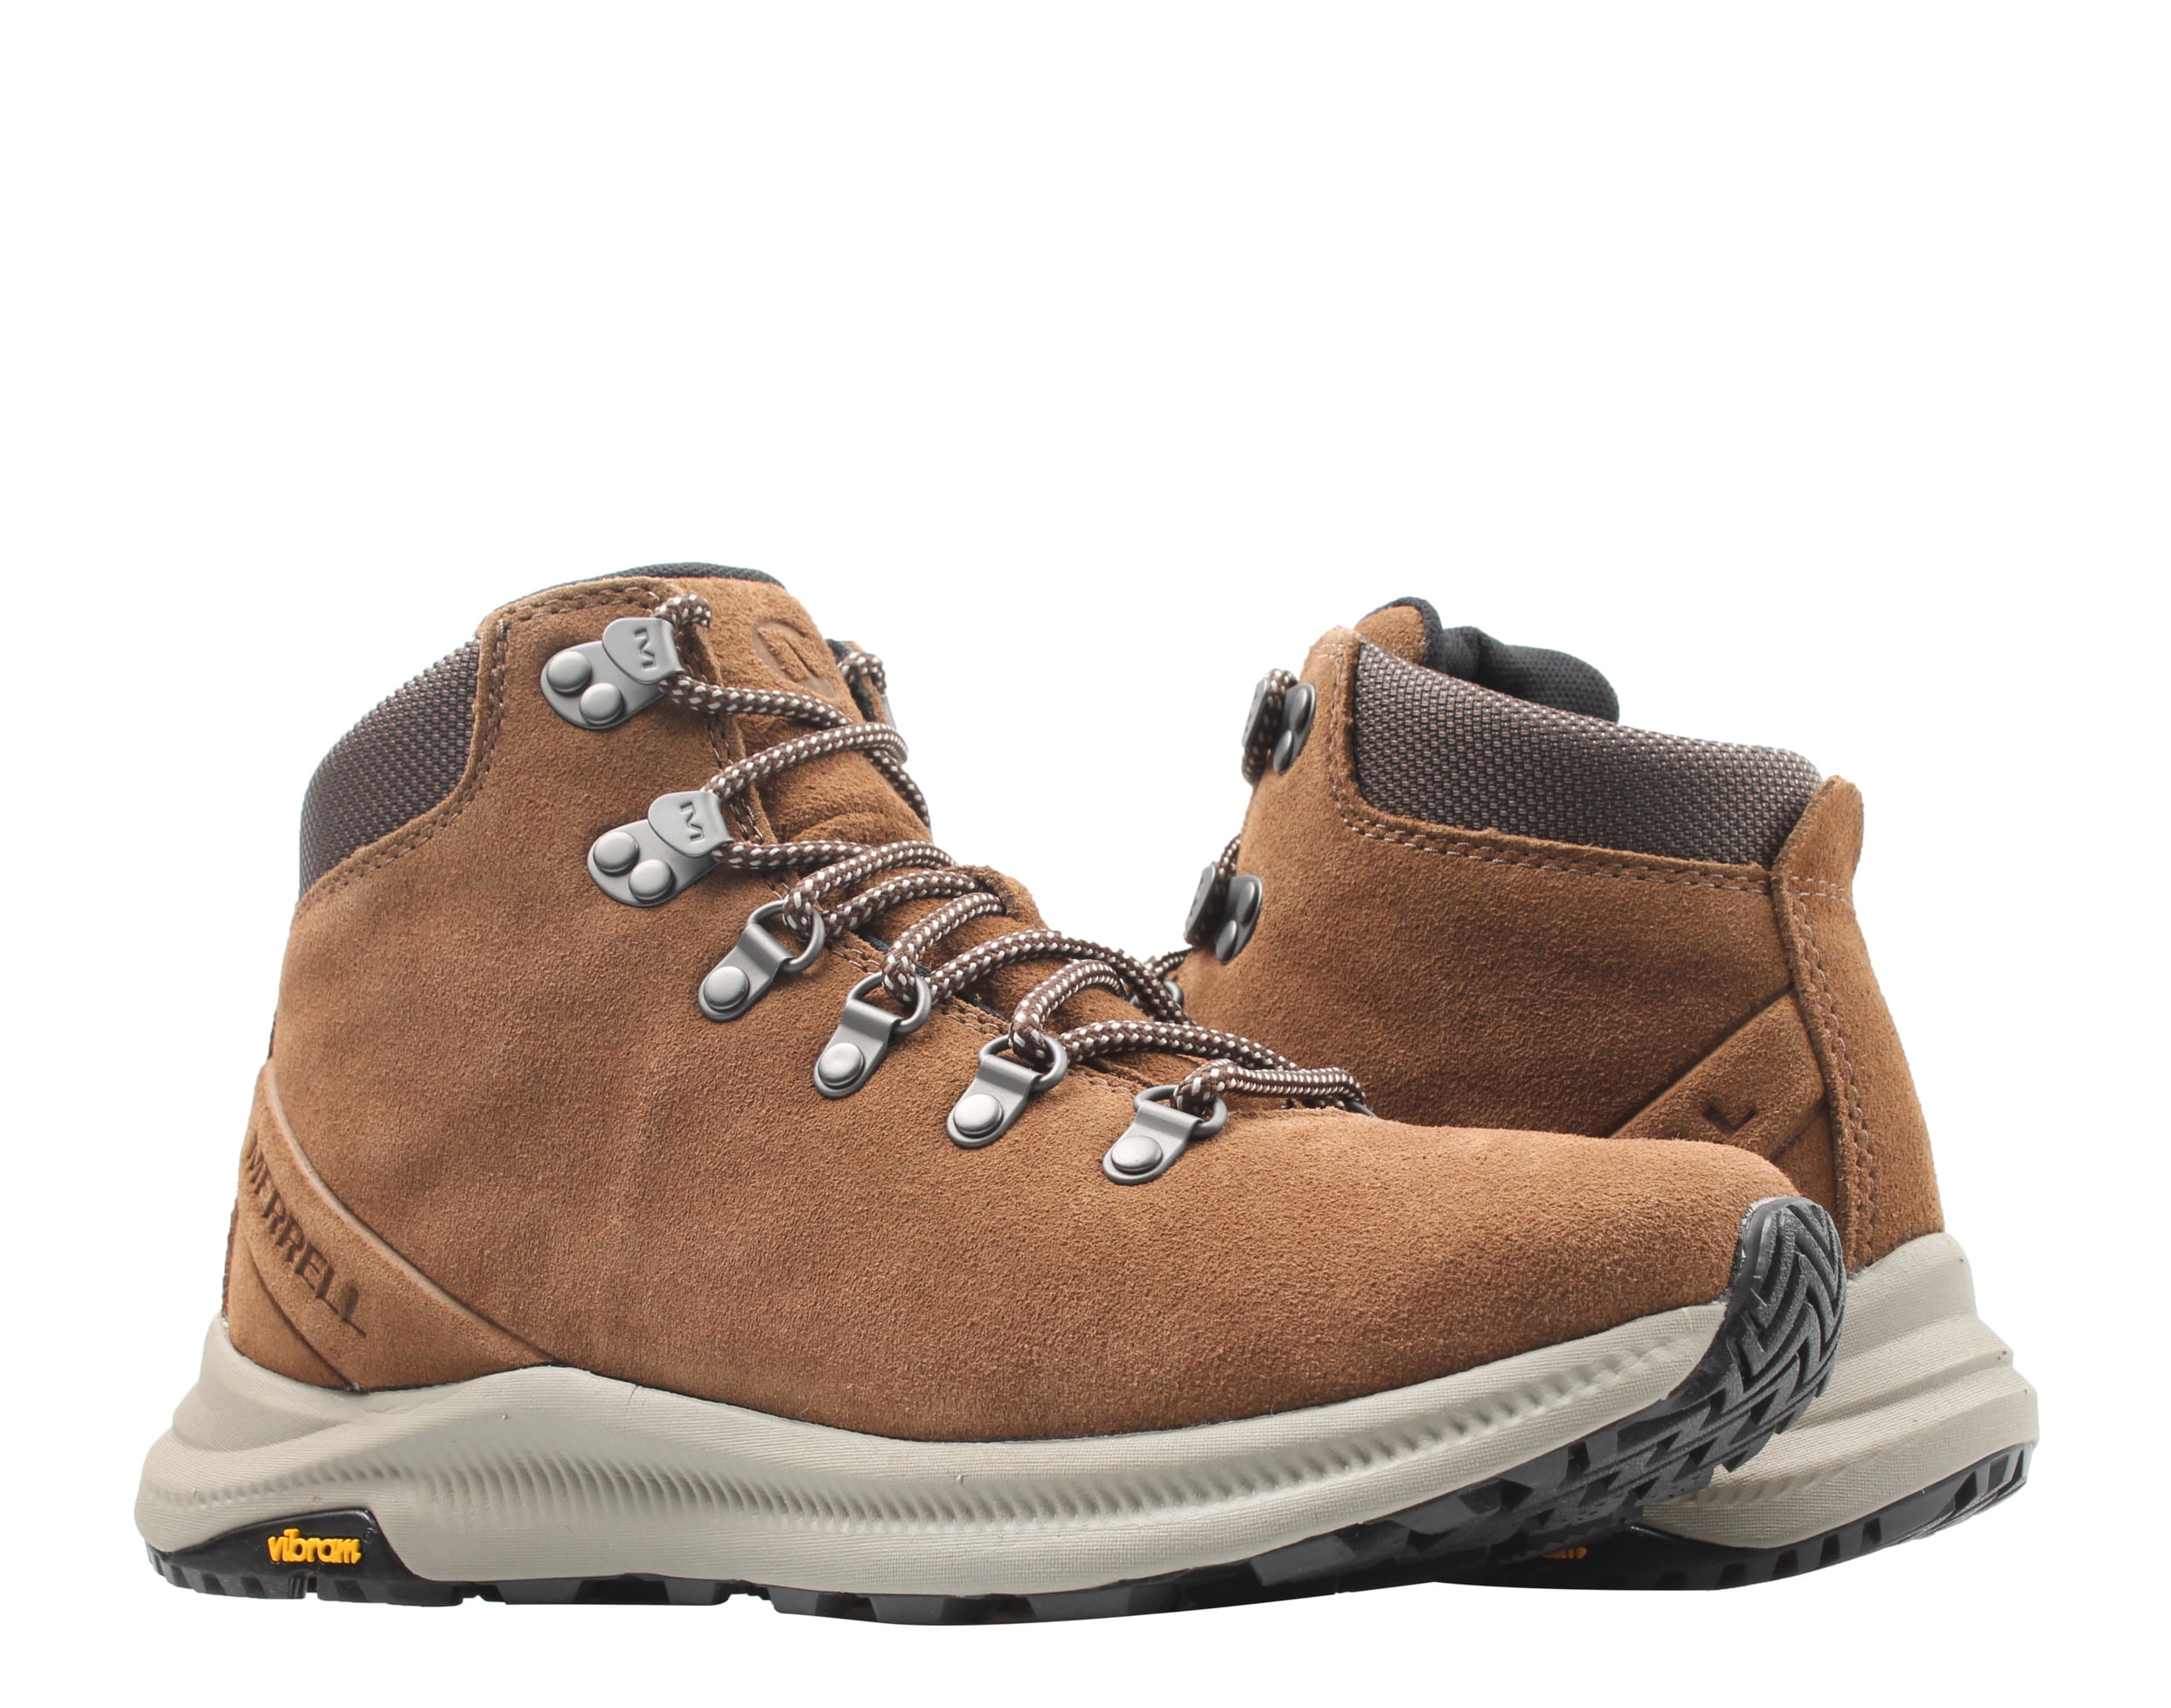 DEK Men's Hiking Boots Synthetic Leather Hill Walking Trek Shoes "Ontario" 